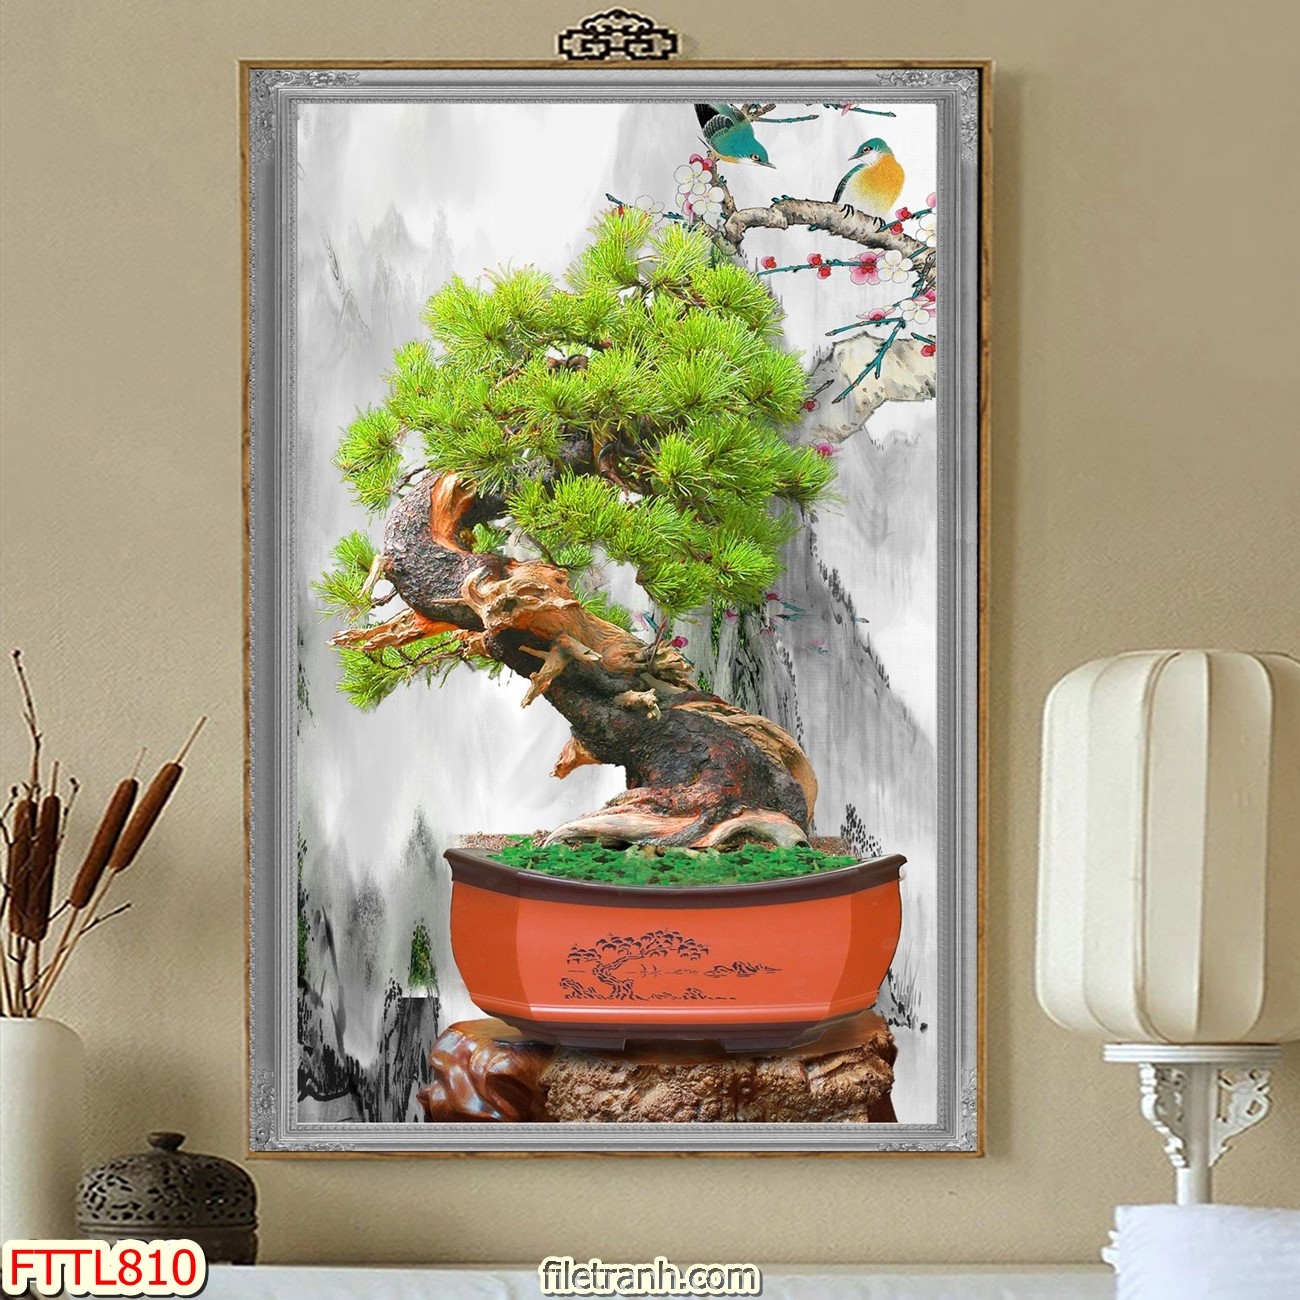 https://filetranh.com/file-tranh-chau-mai-bonsai/file-tranh-chau-mai-bonsai-fttl810.html